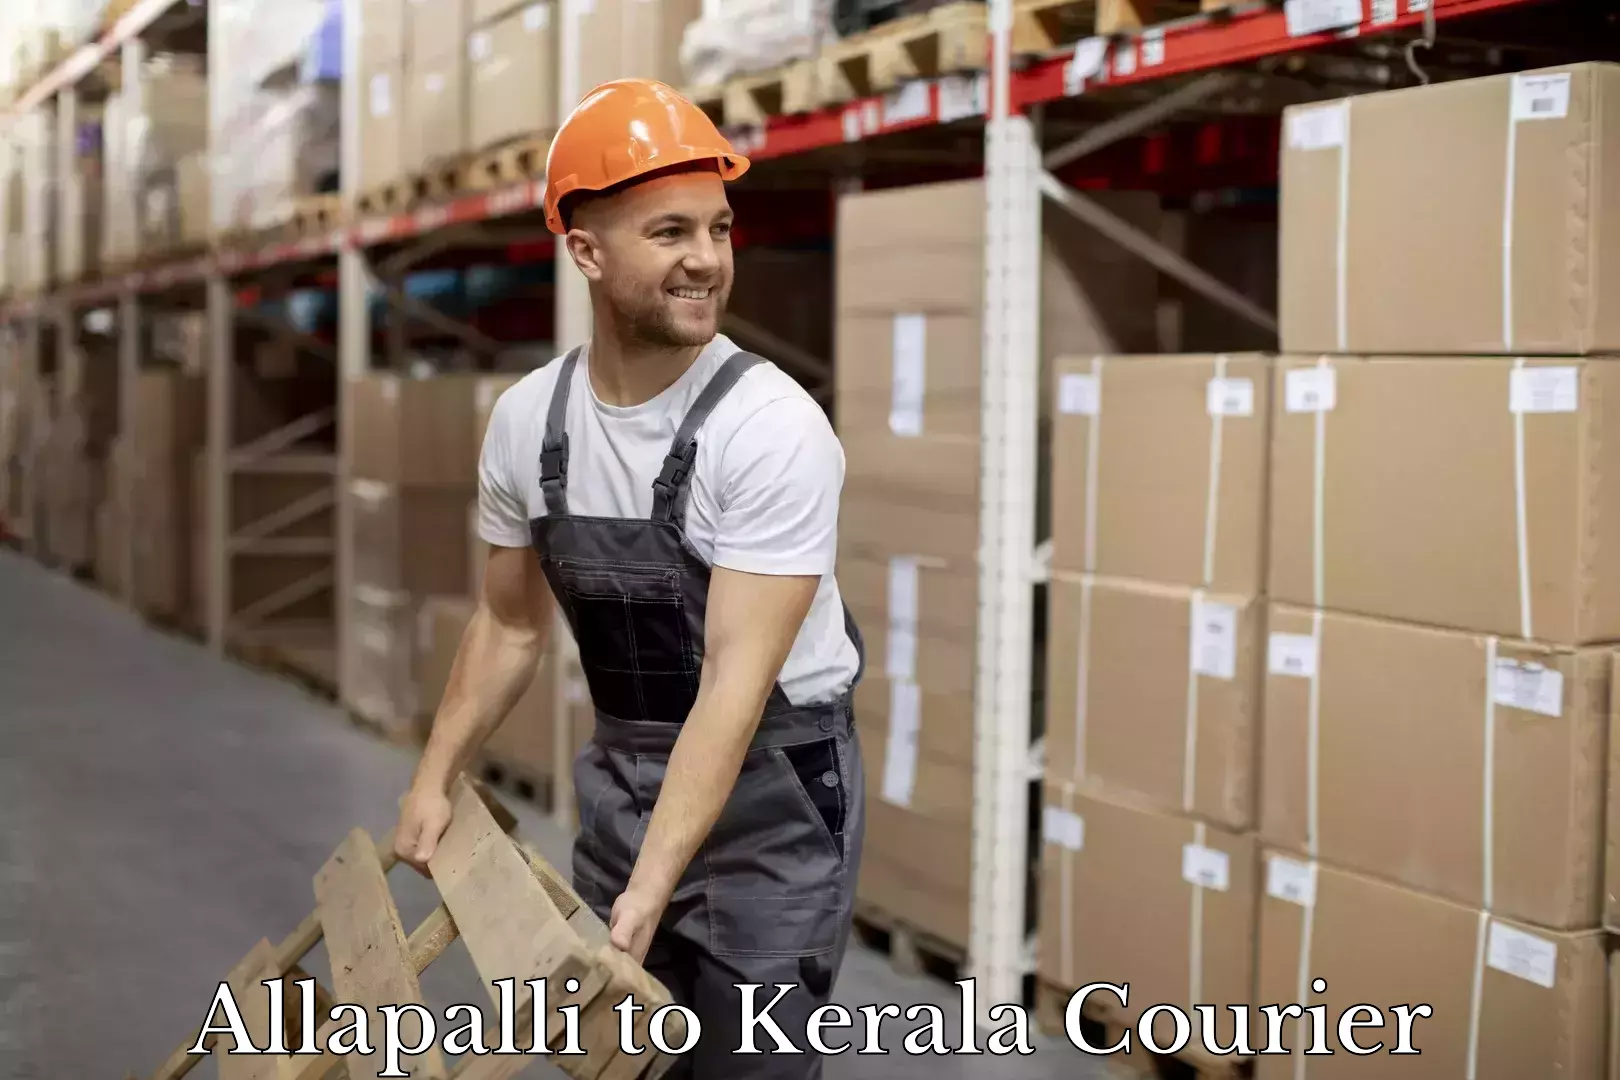 Digital courier platforms Allapalli to Kerala